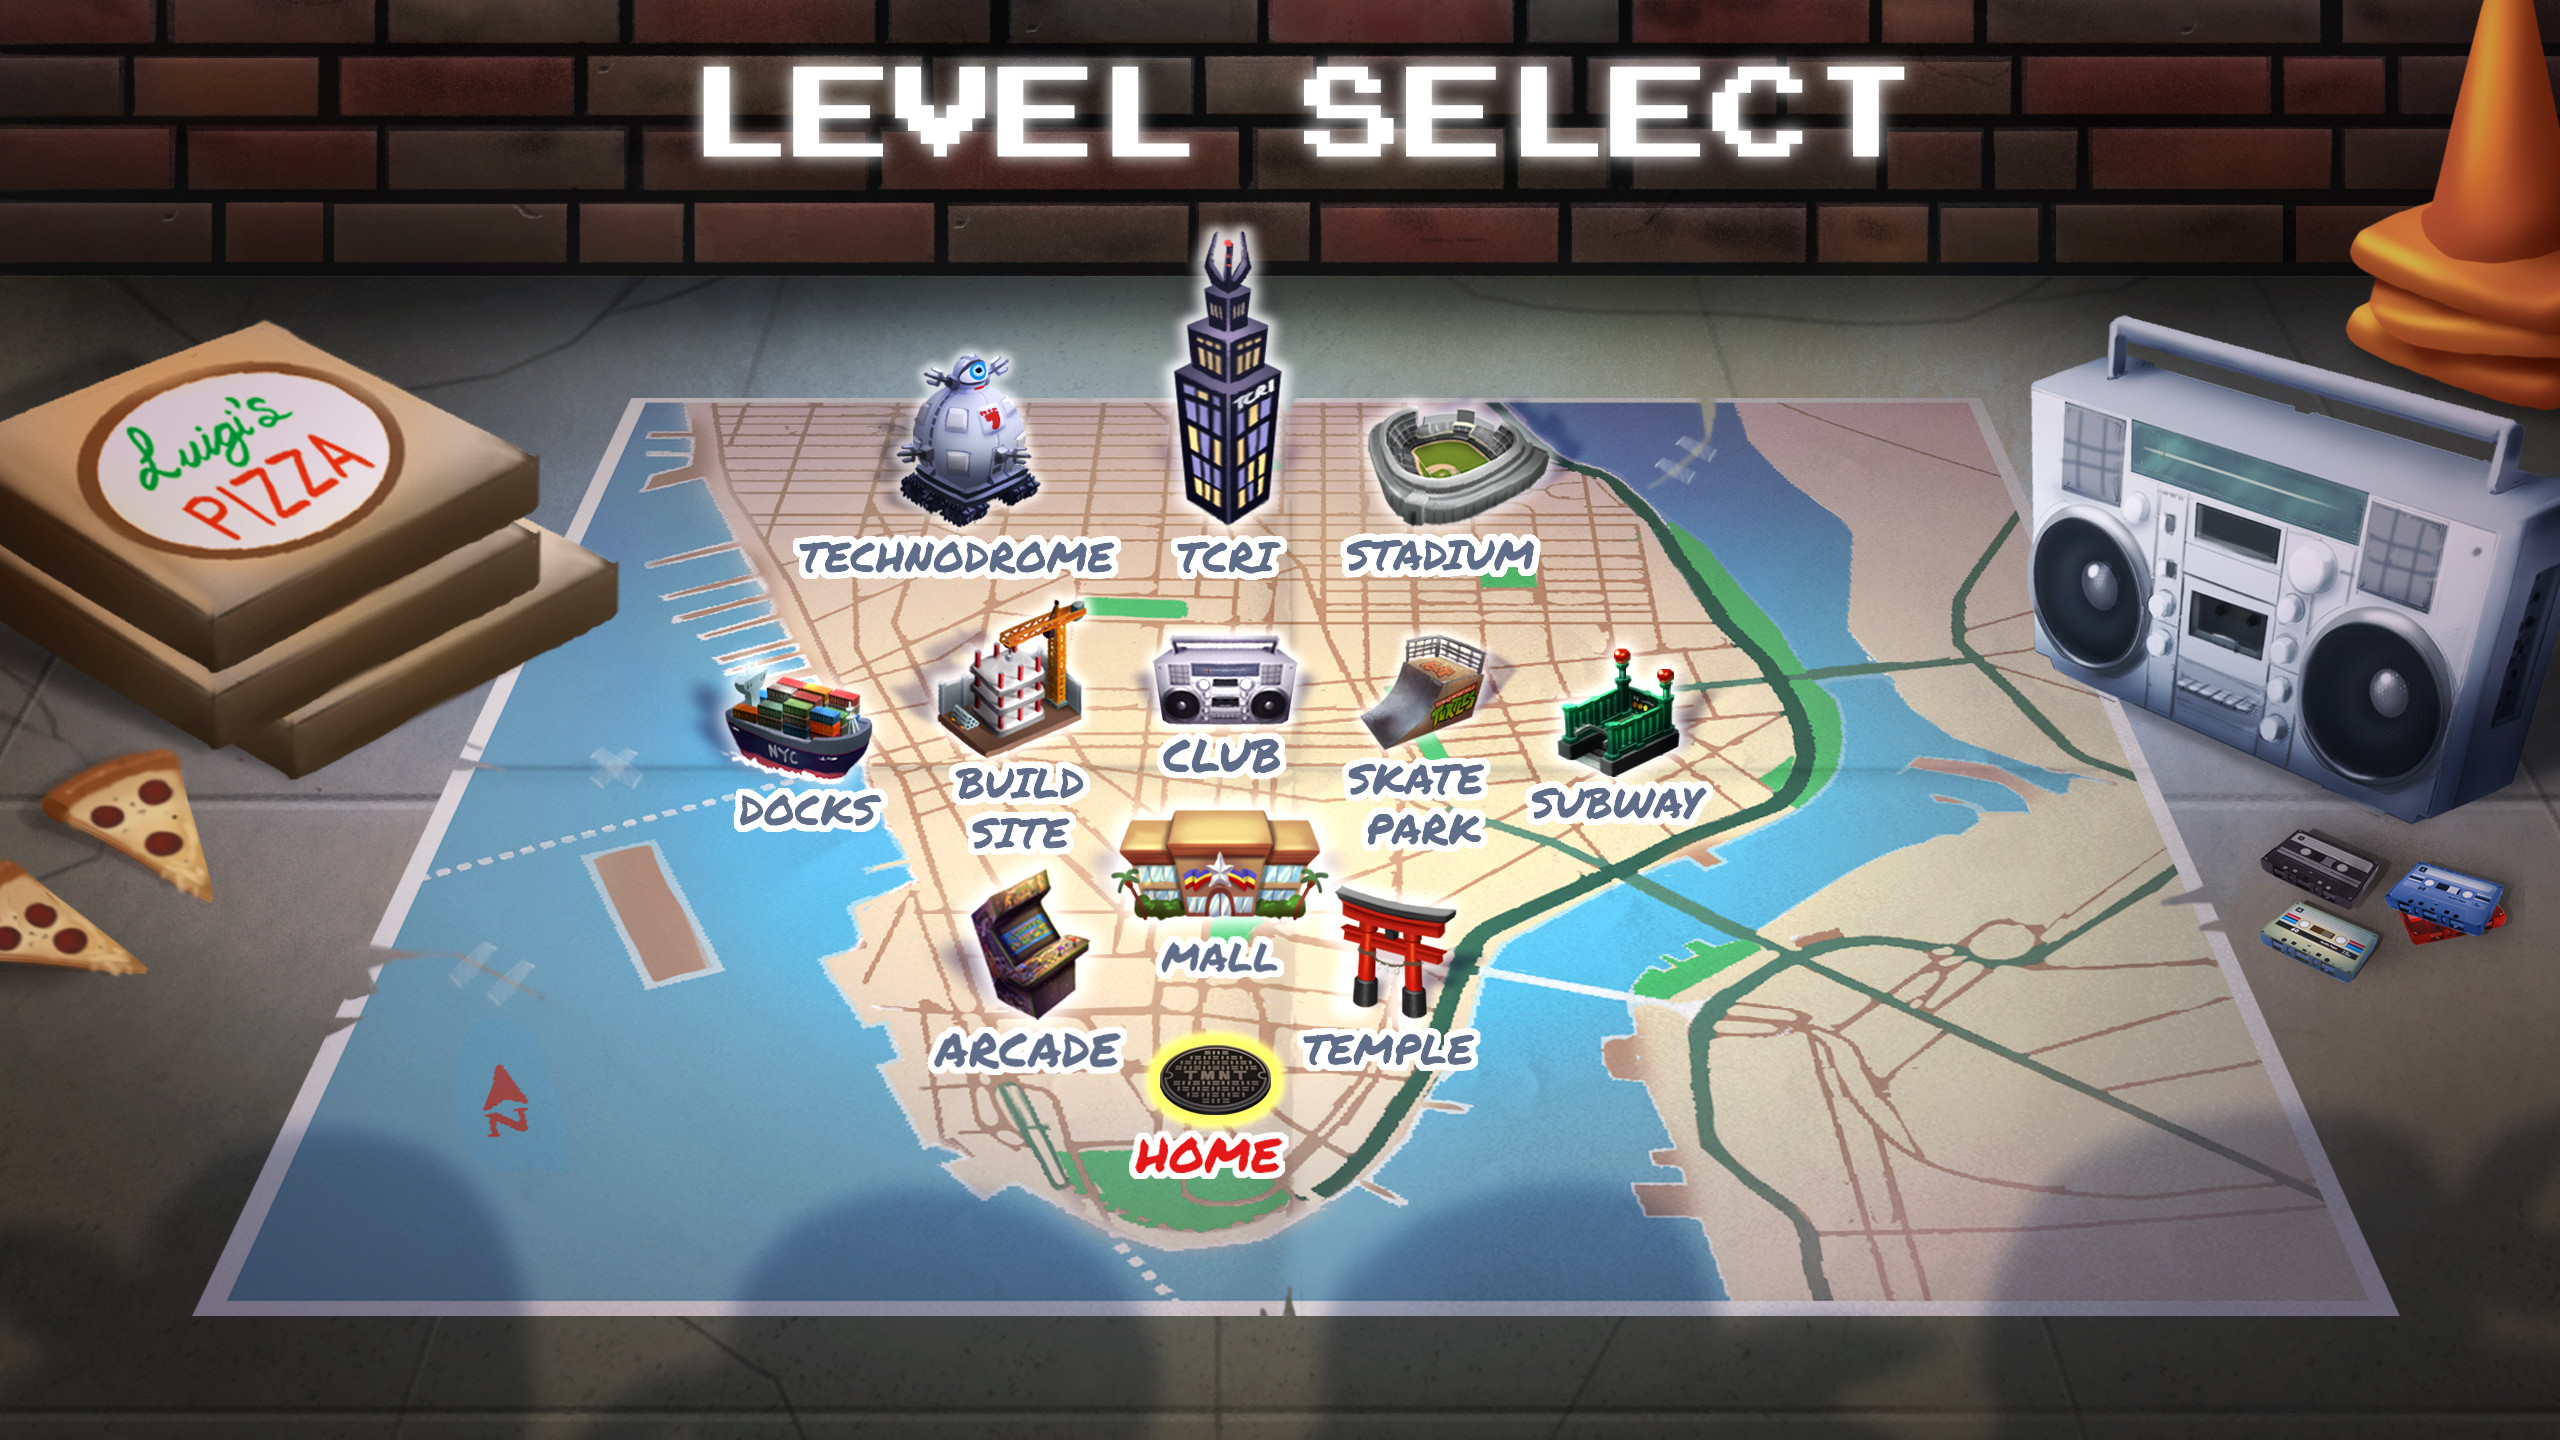 Level Select